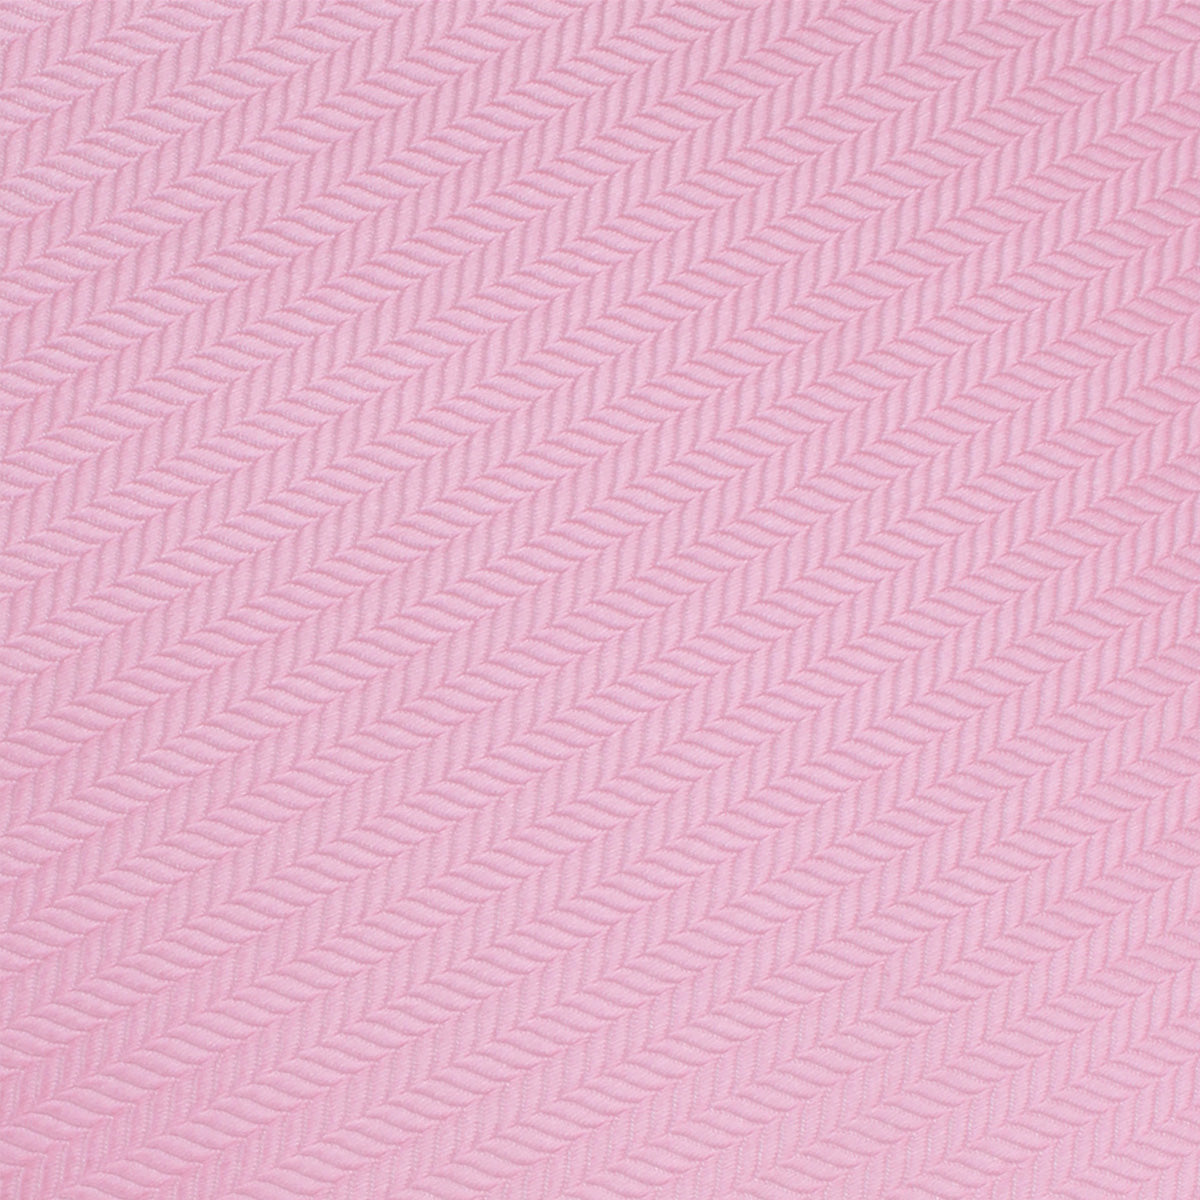 Tickled Pink Herringbone Chevron Fabric Swatch